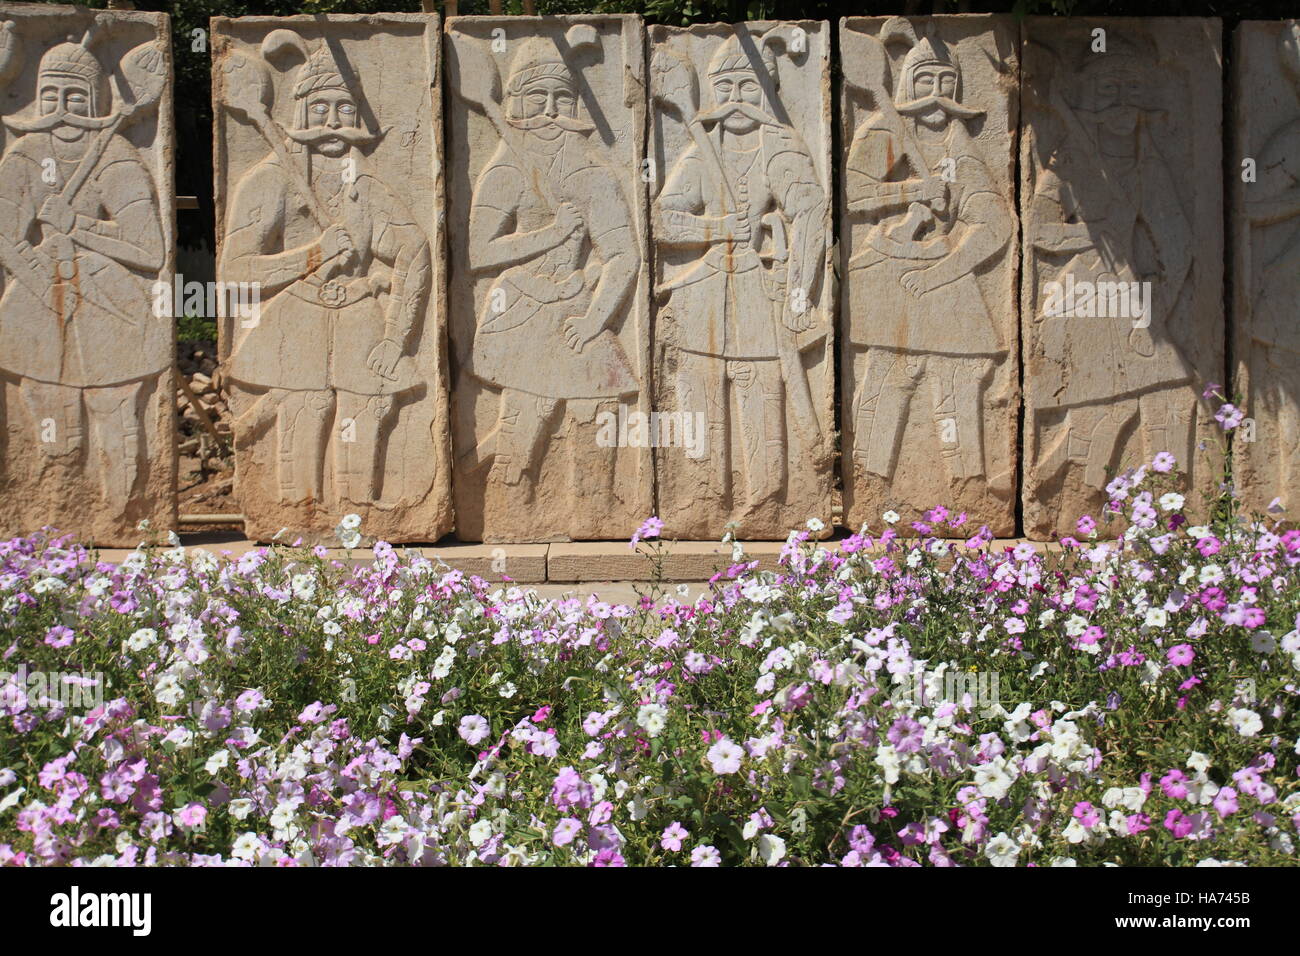 Plinths of the wall of Khorshid Palace (Sun Palace), the legendary figures of Shahnameh, Qajar era. Bagh-e Nazar museum, Shiraz. Stock Photo